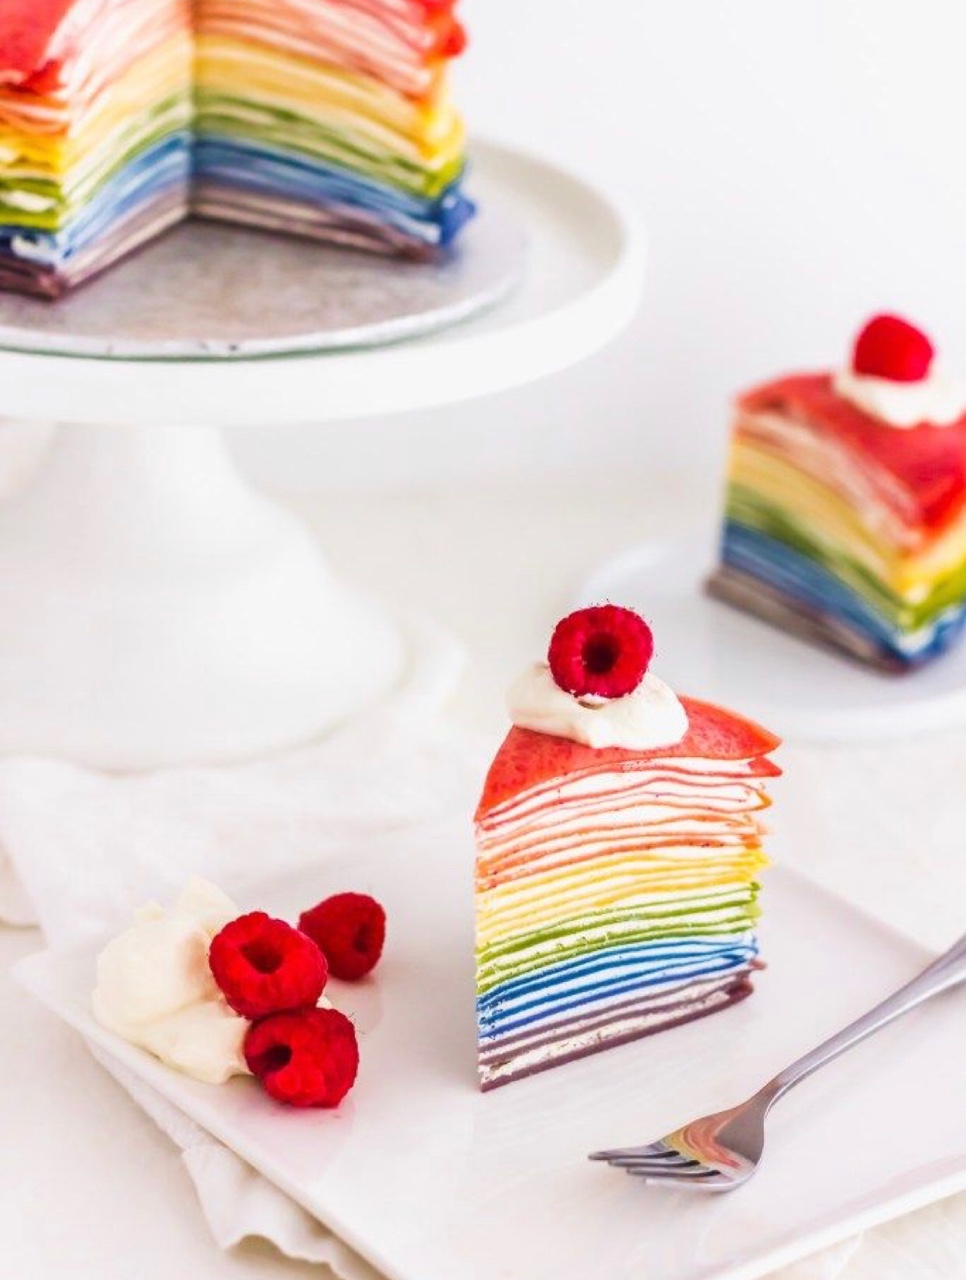 Best Rainbow Crepe Cake Recipe - How To Make Rainbow Crepe Cake - Delish.com